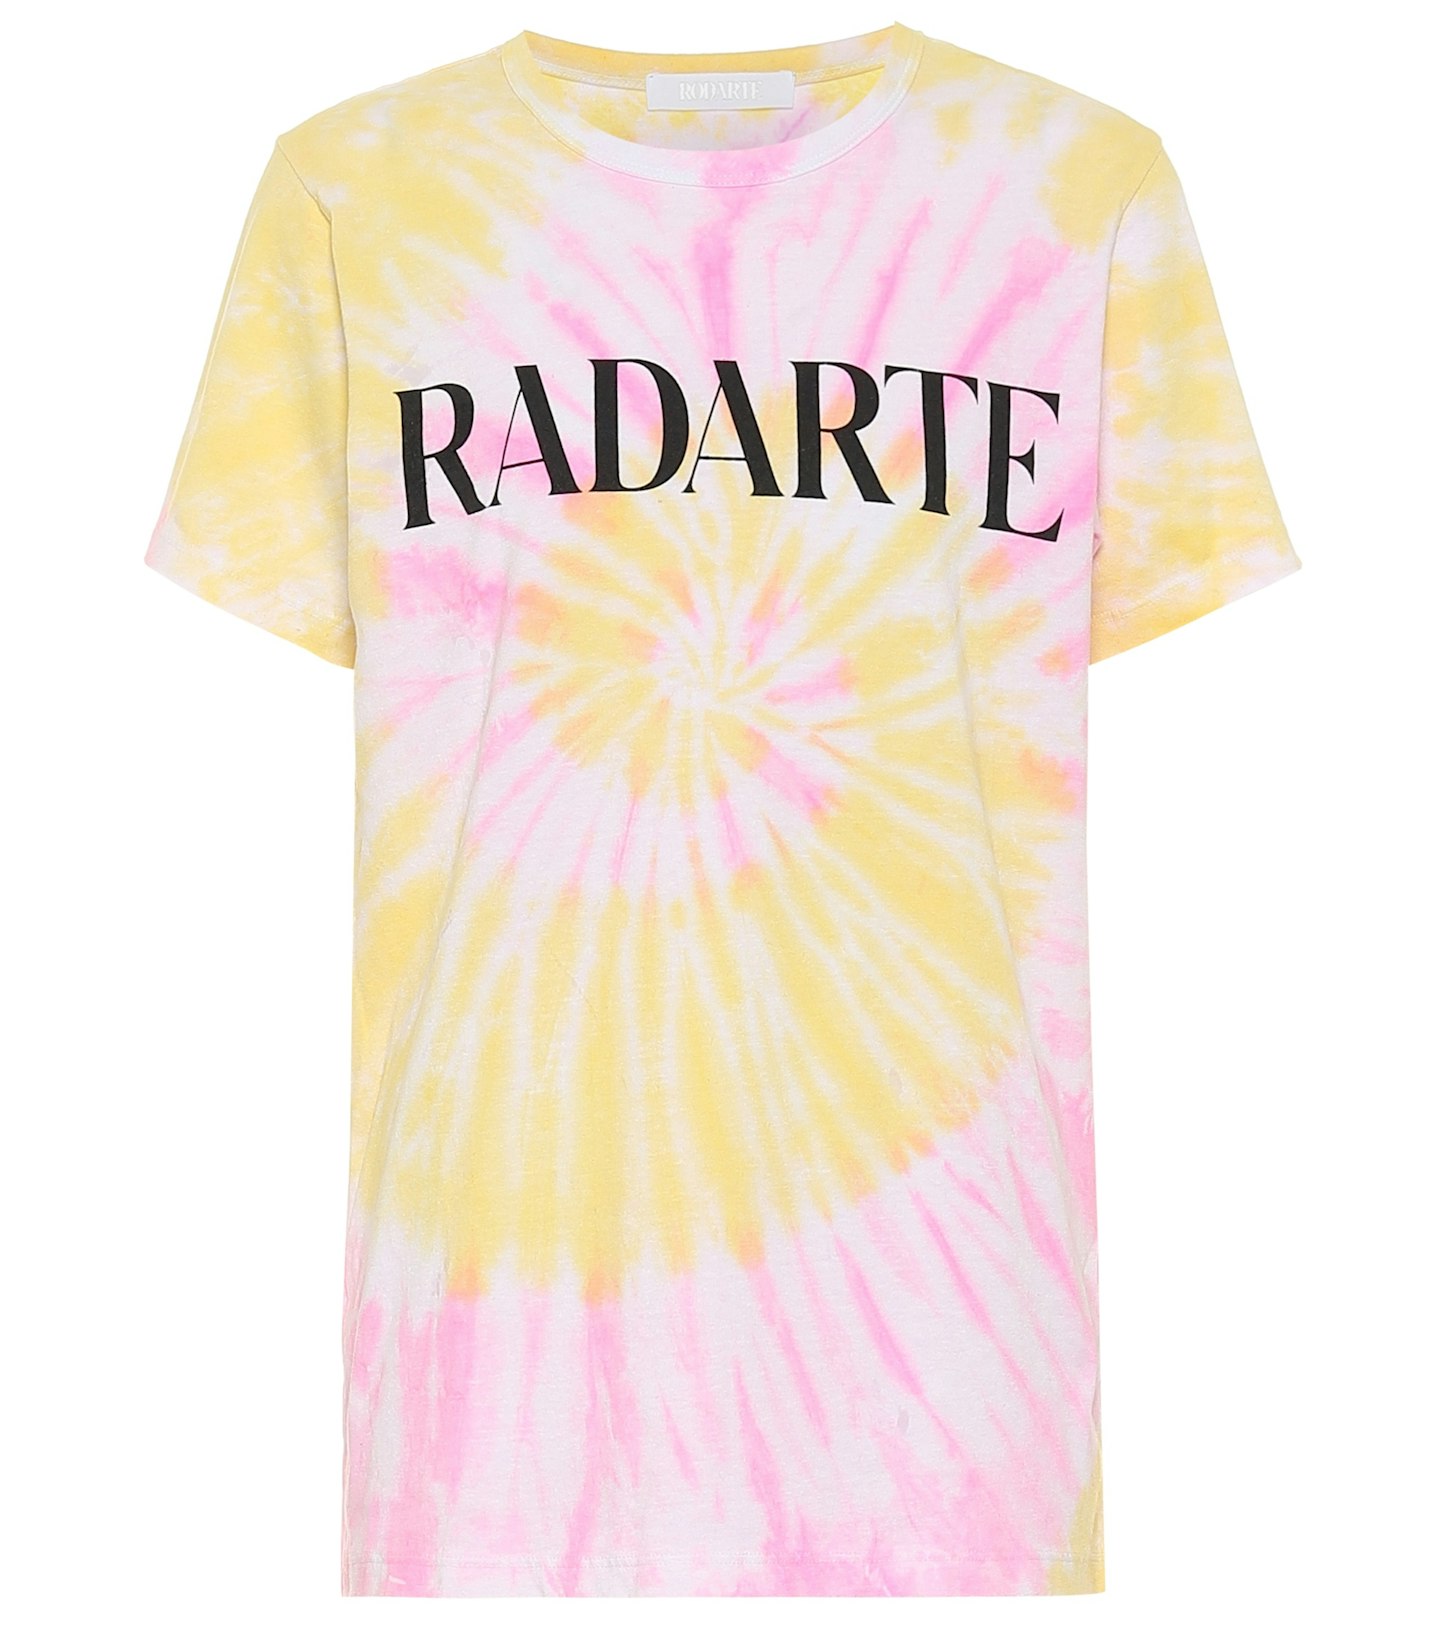 Rodarte, Radarte Tie-Dye T-shirt, £127